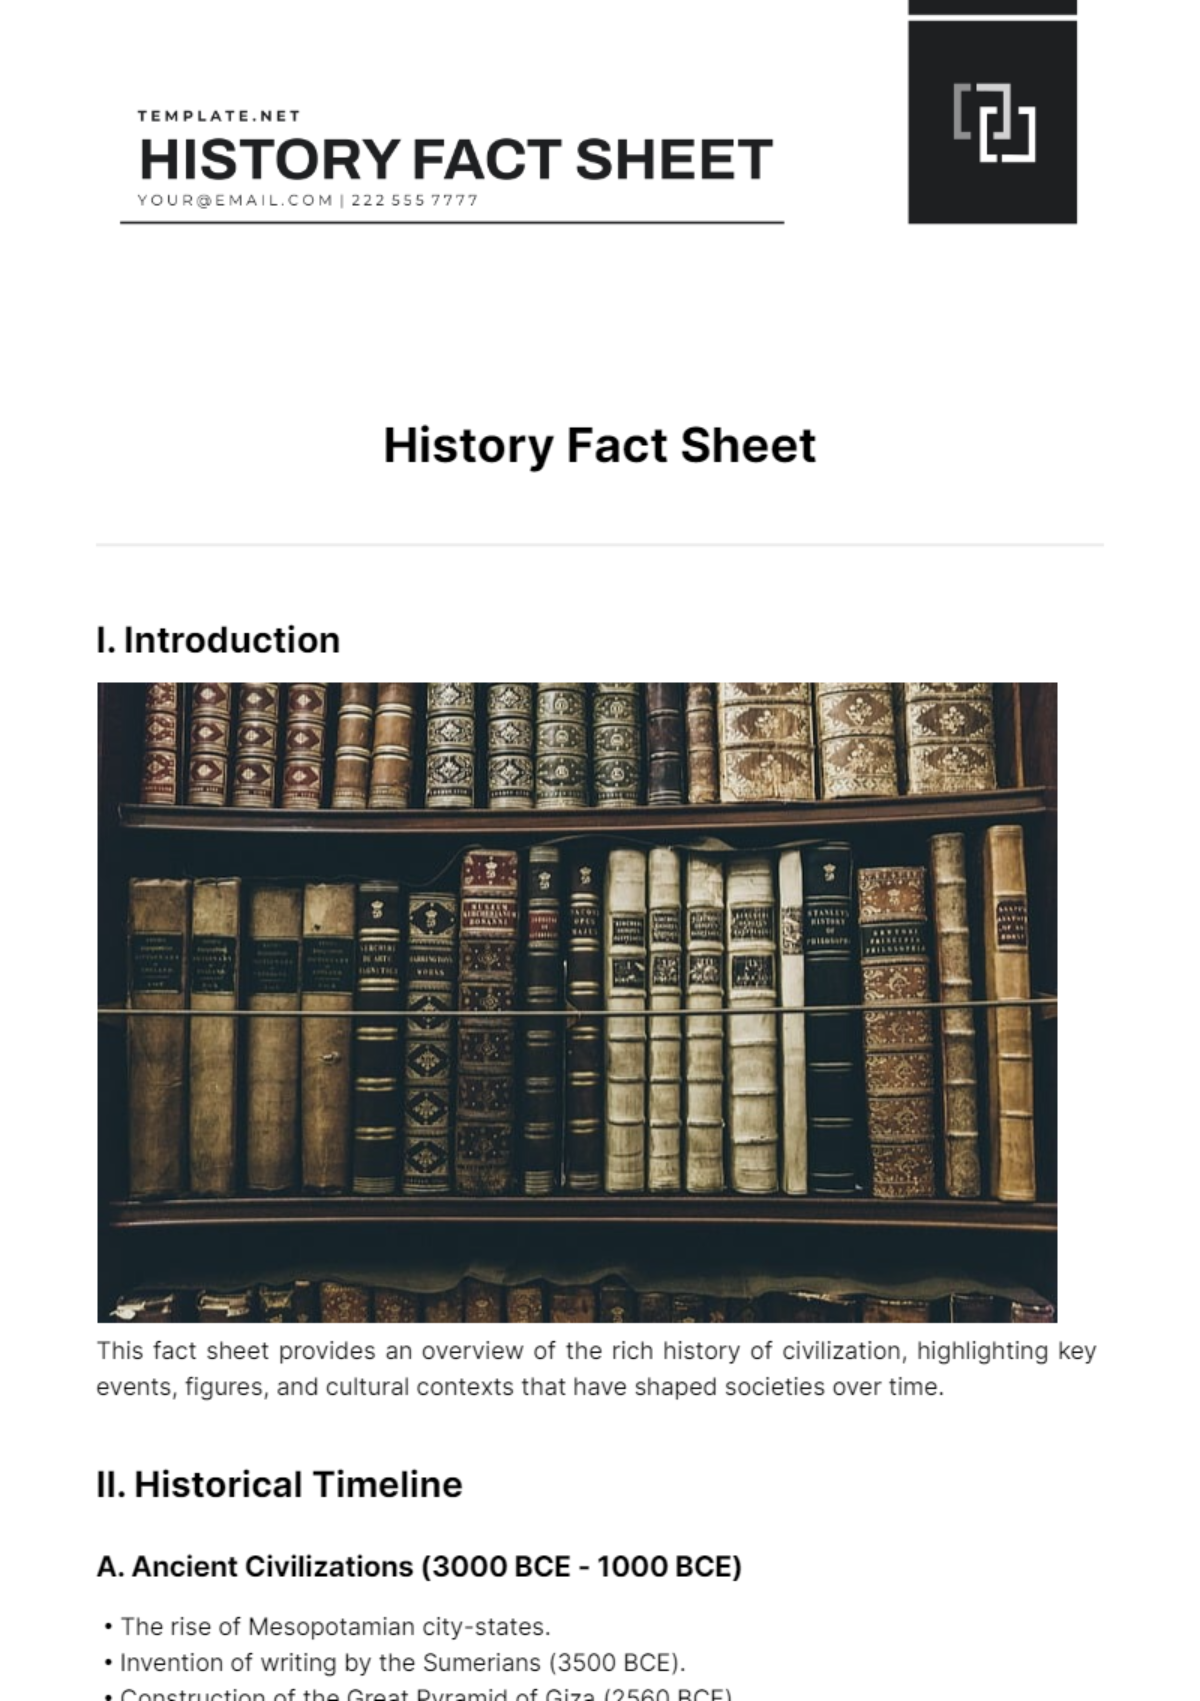 History Fact Sheet Template